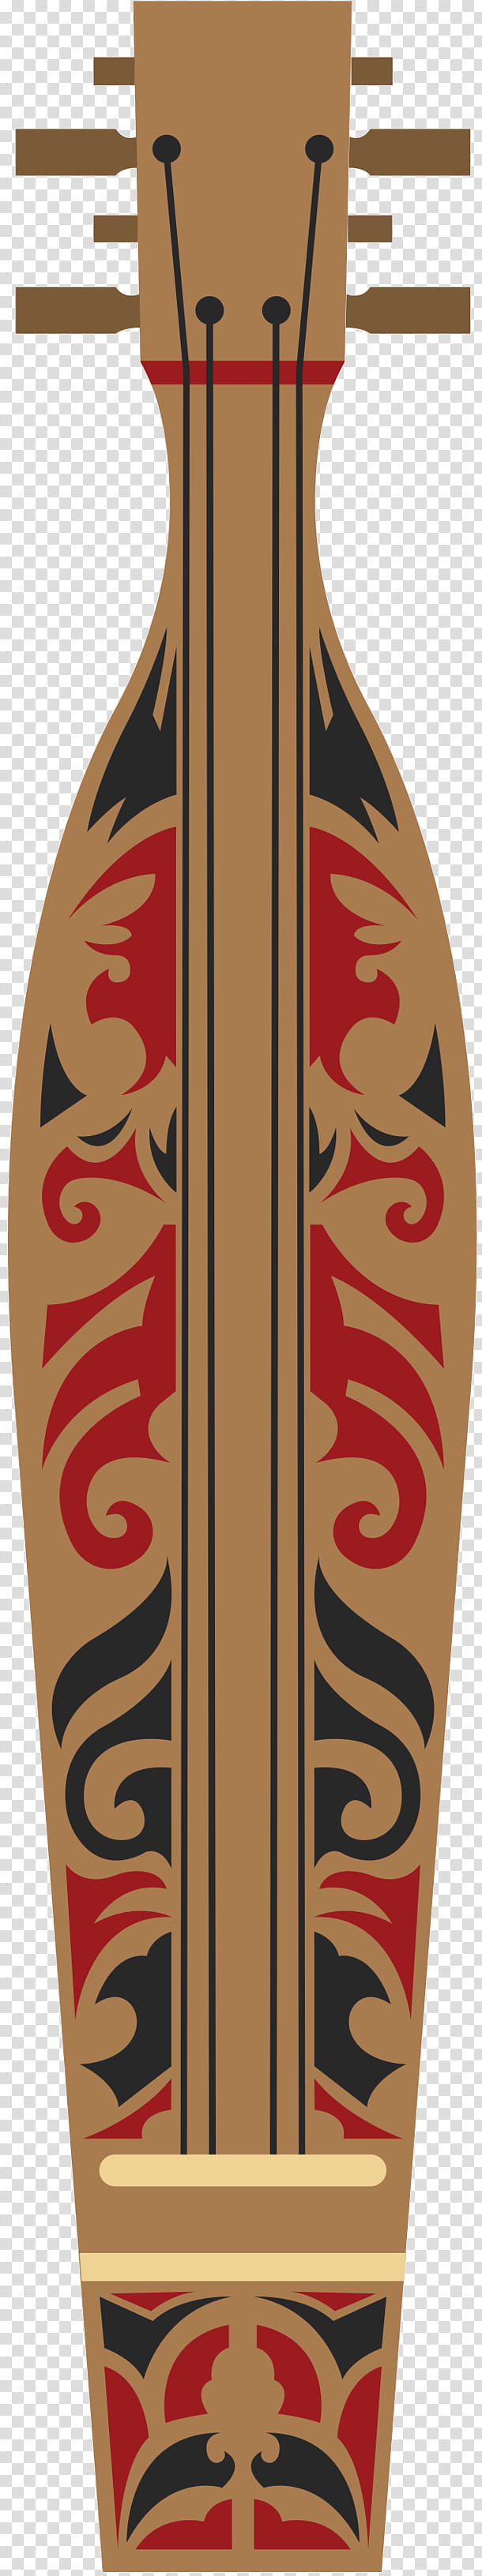 Skateboard Longboard, Skateboarding Equipment, Surfboard, Skateboard Deck, Surfing Equipment, Sports Equipment transparent background PNG clipart